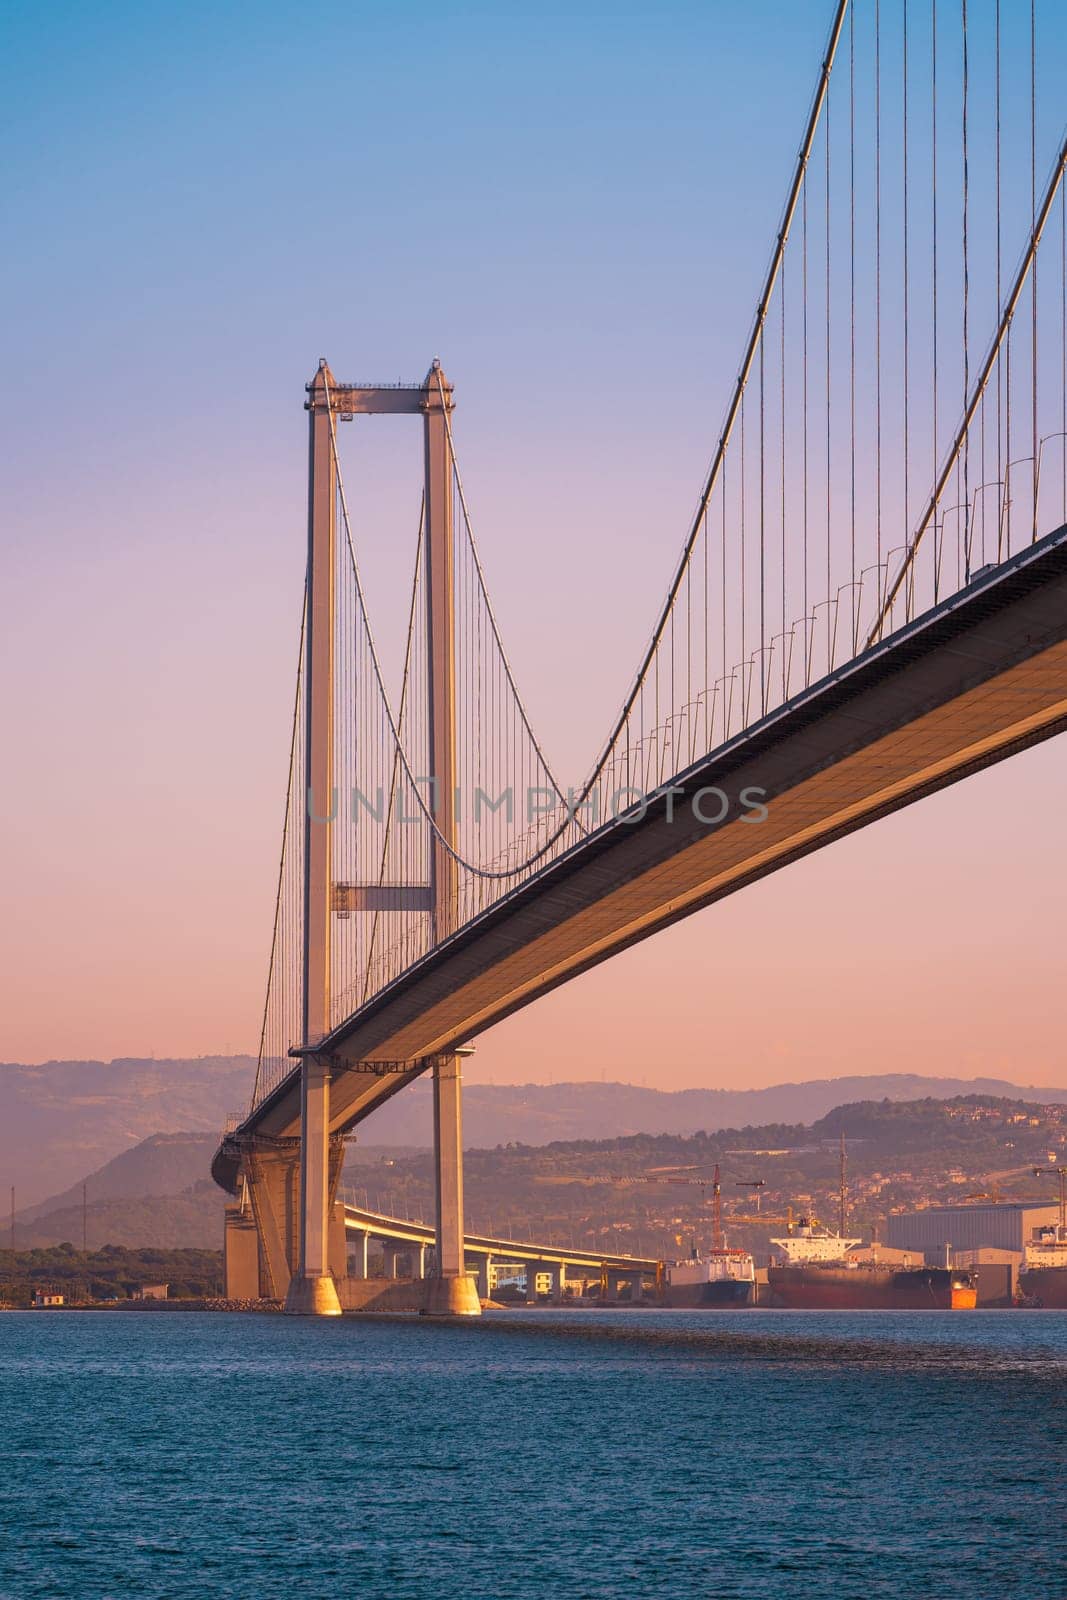 Osmangazi Bridge (Izmit Bay Bridge) located in Izmit, Kocaeli, Turkey. Suspension bridge by Sonat